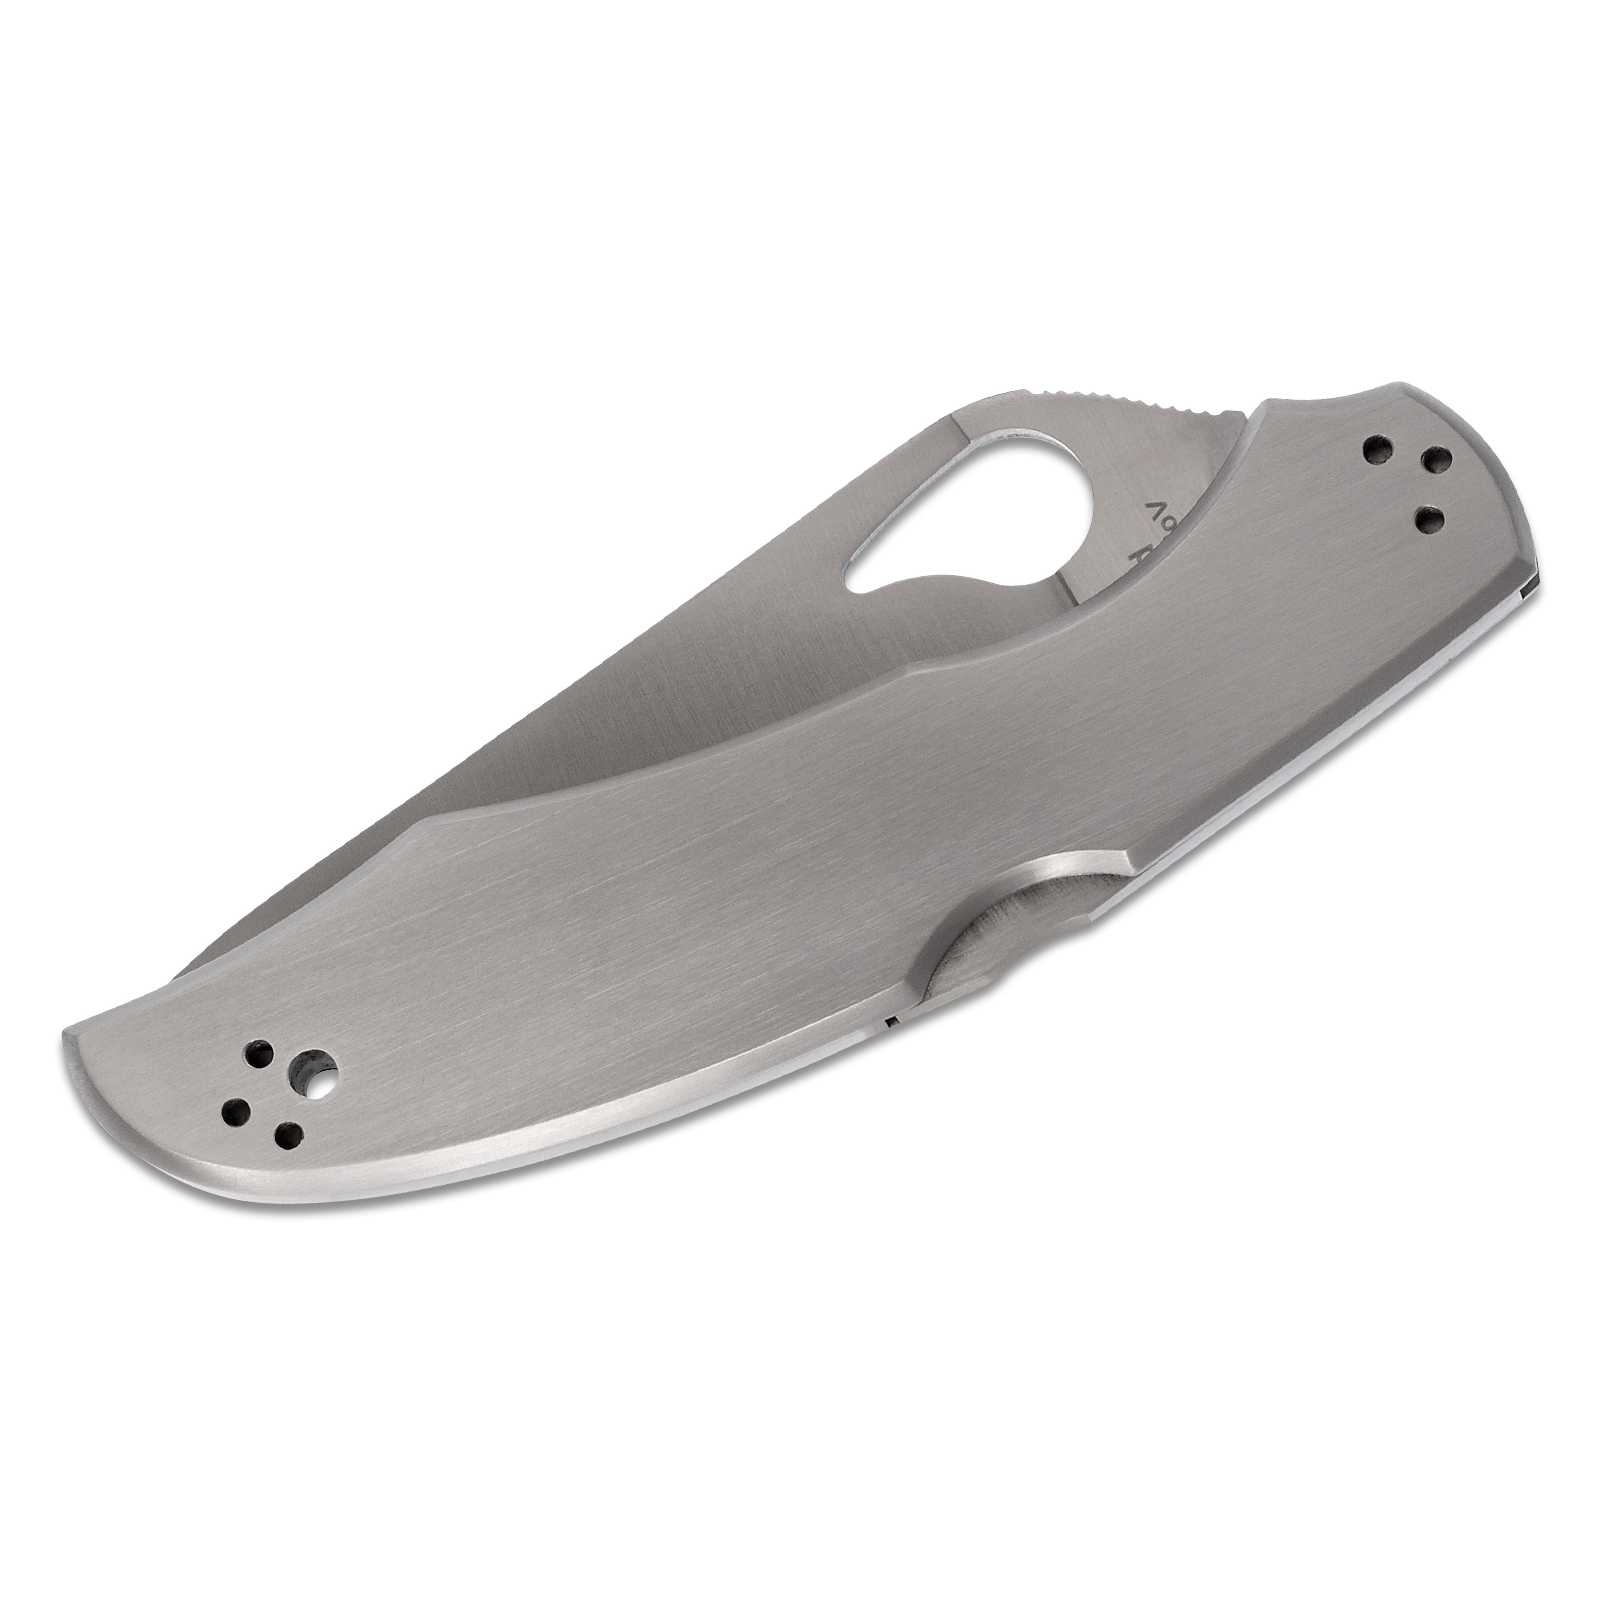 Нож Spyderco Byrd Cara Cara 2 Steel Handle (BY03P2) изображение 3